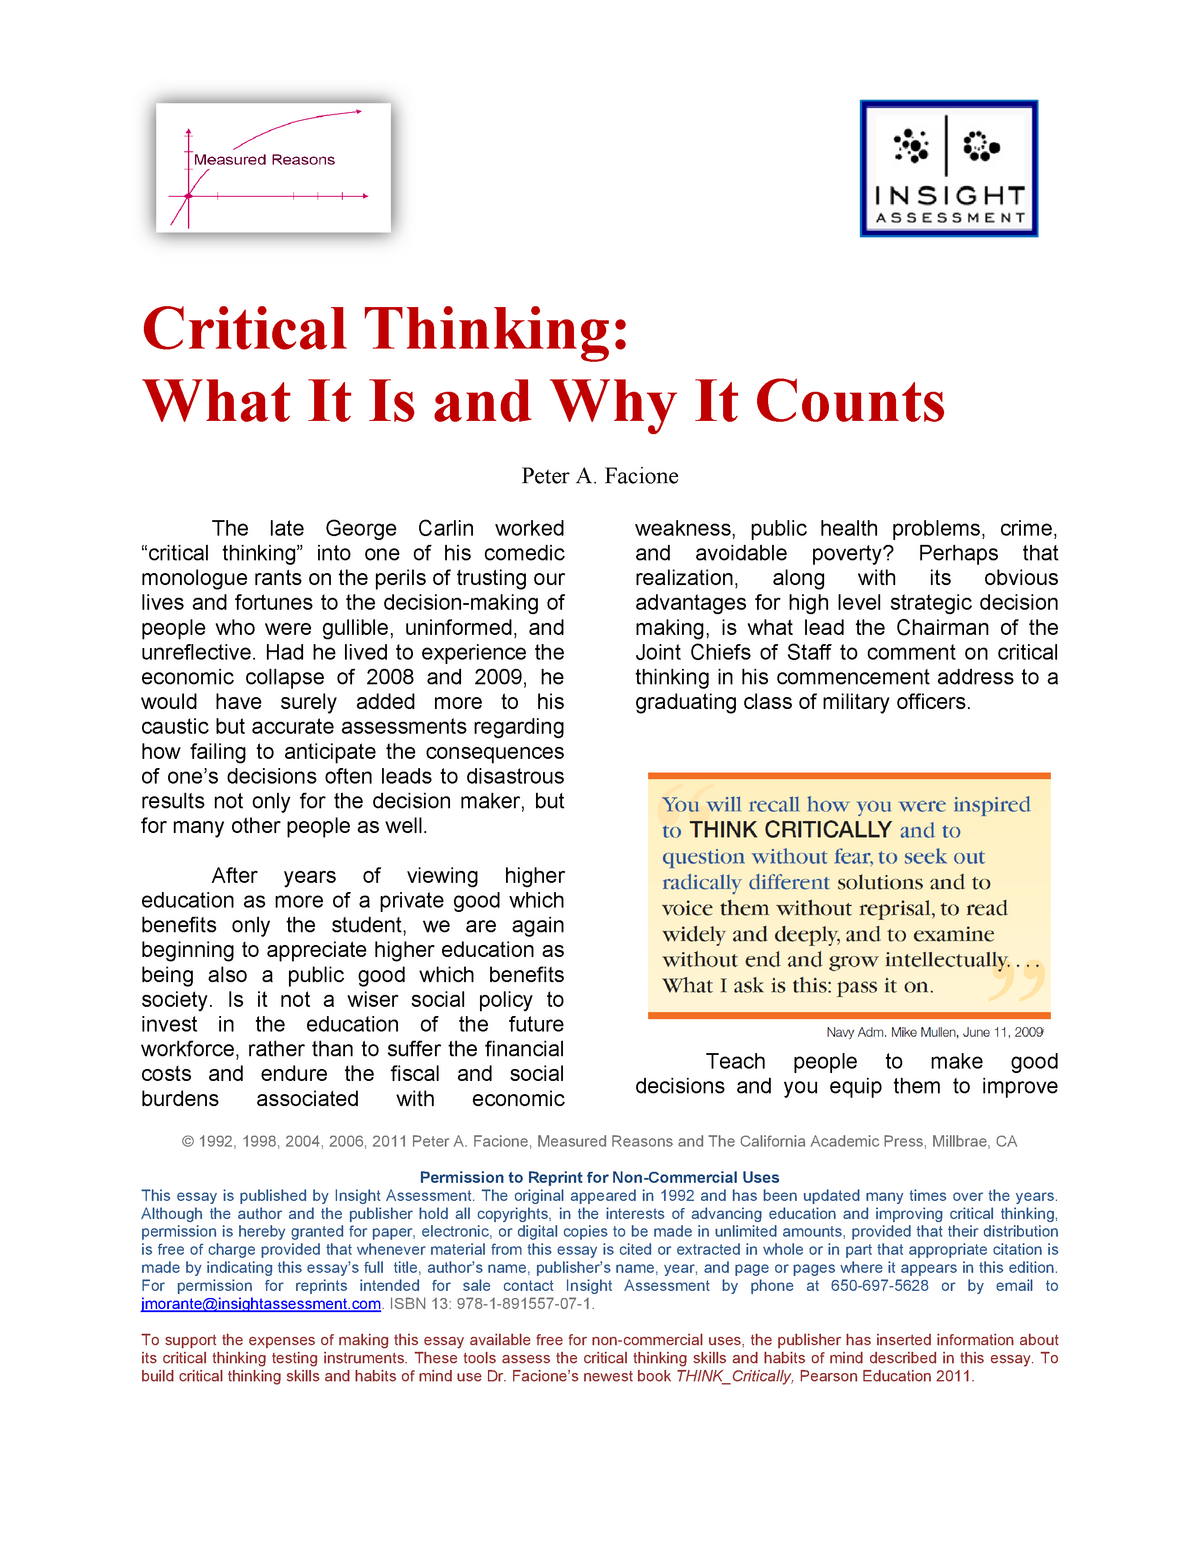 essay on critical thinking skills